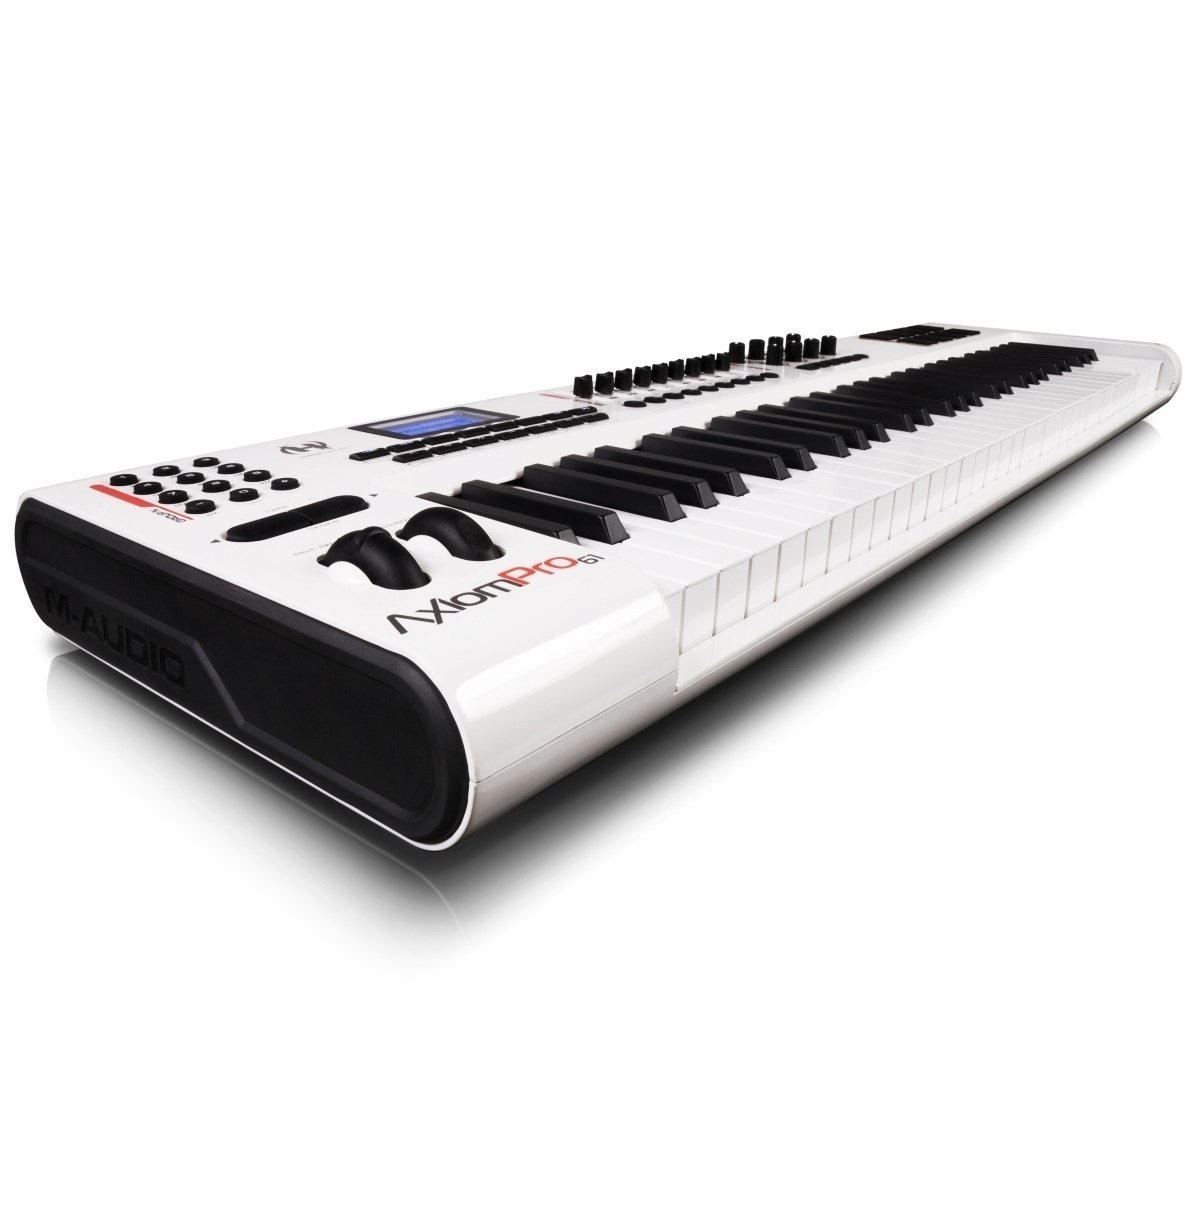 Миди клавиатура M-Audio Axiom Pro 61